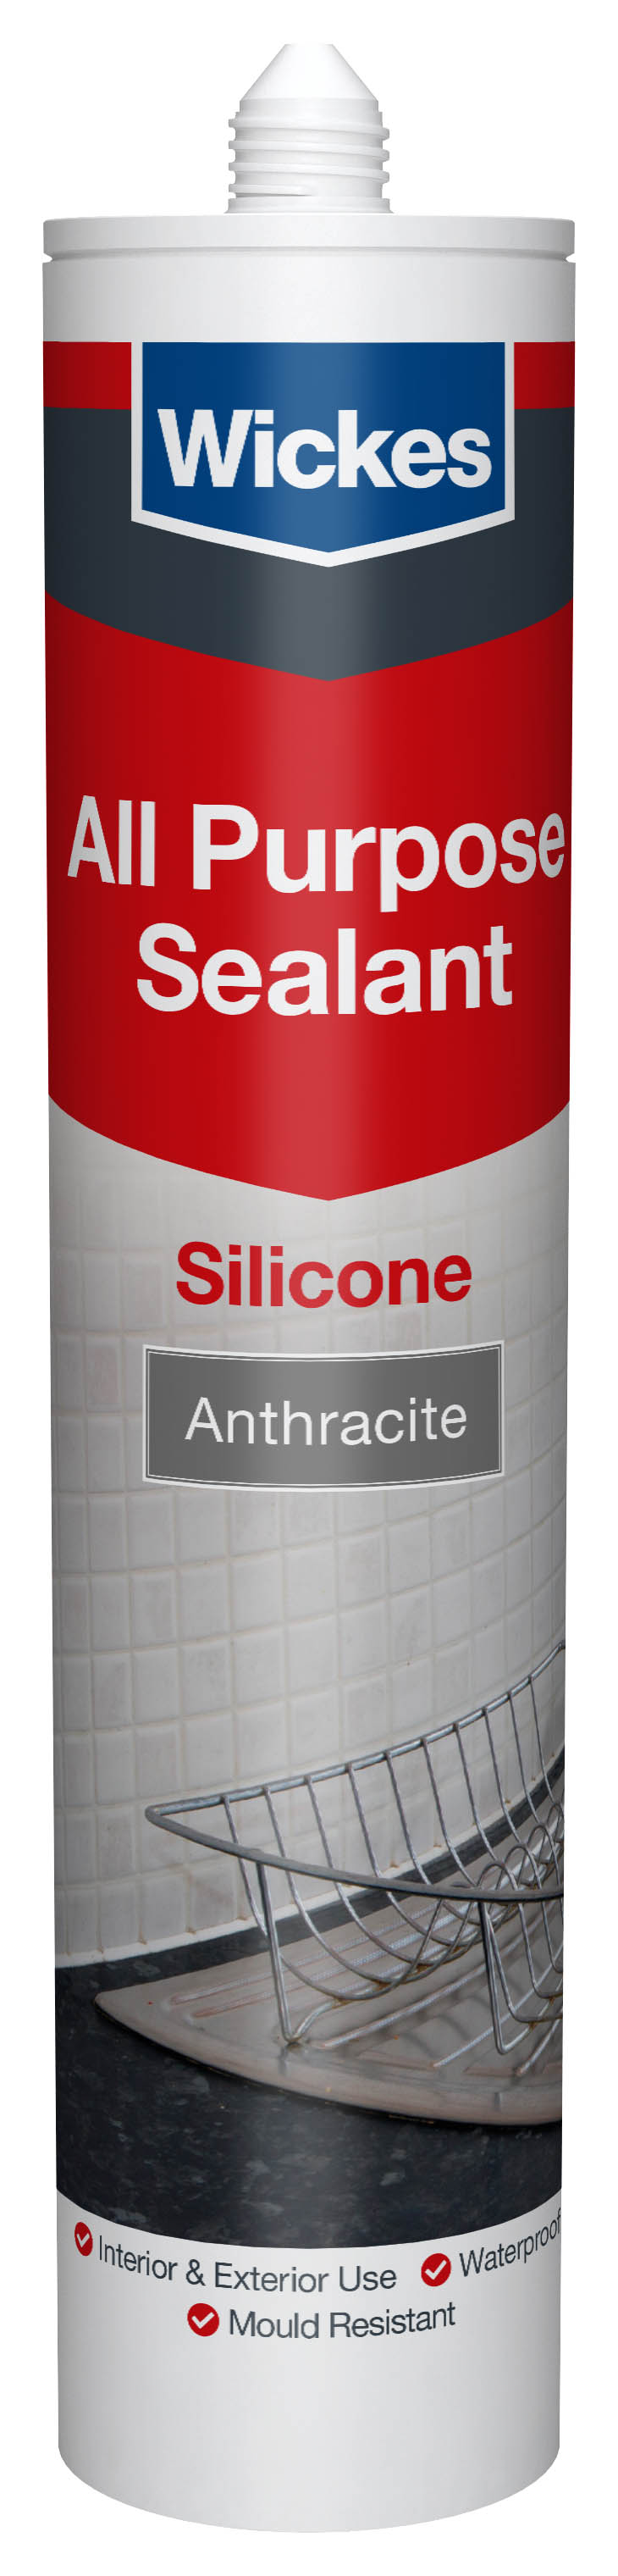 Image of Wickes All Purpose Silicone Sealant Anthracite 300ml